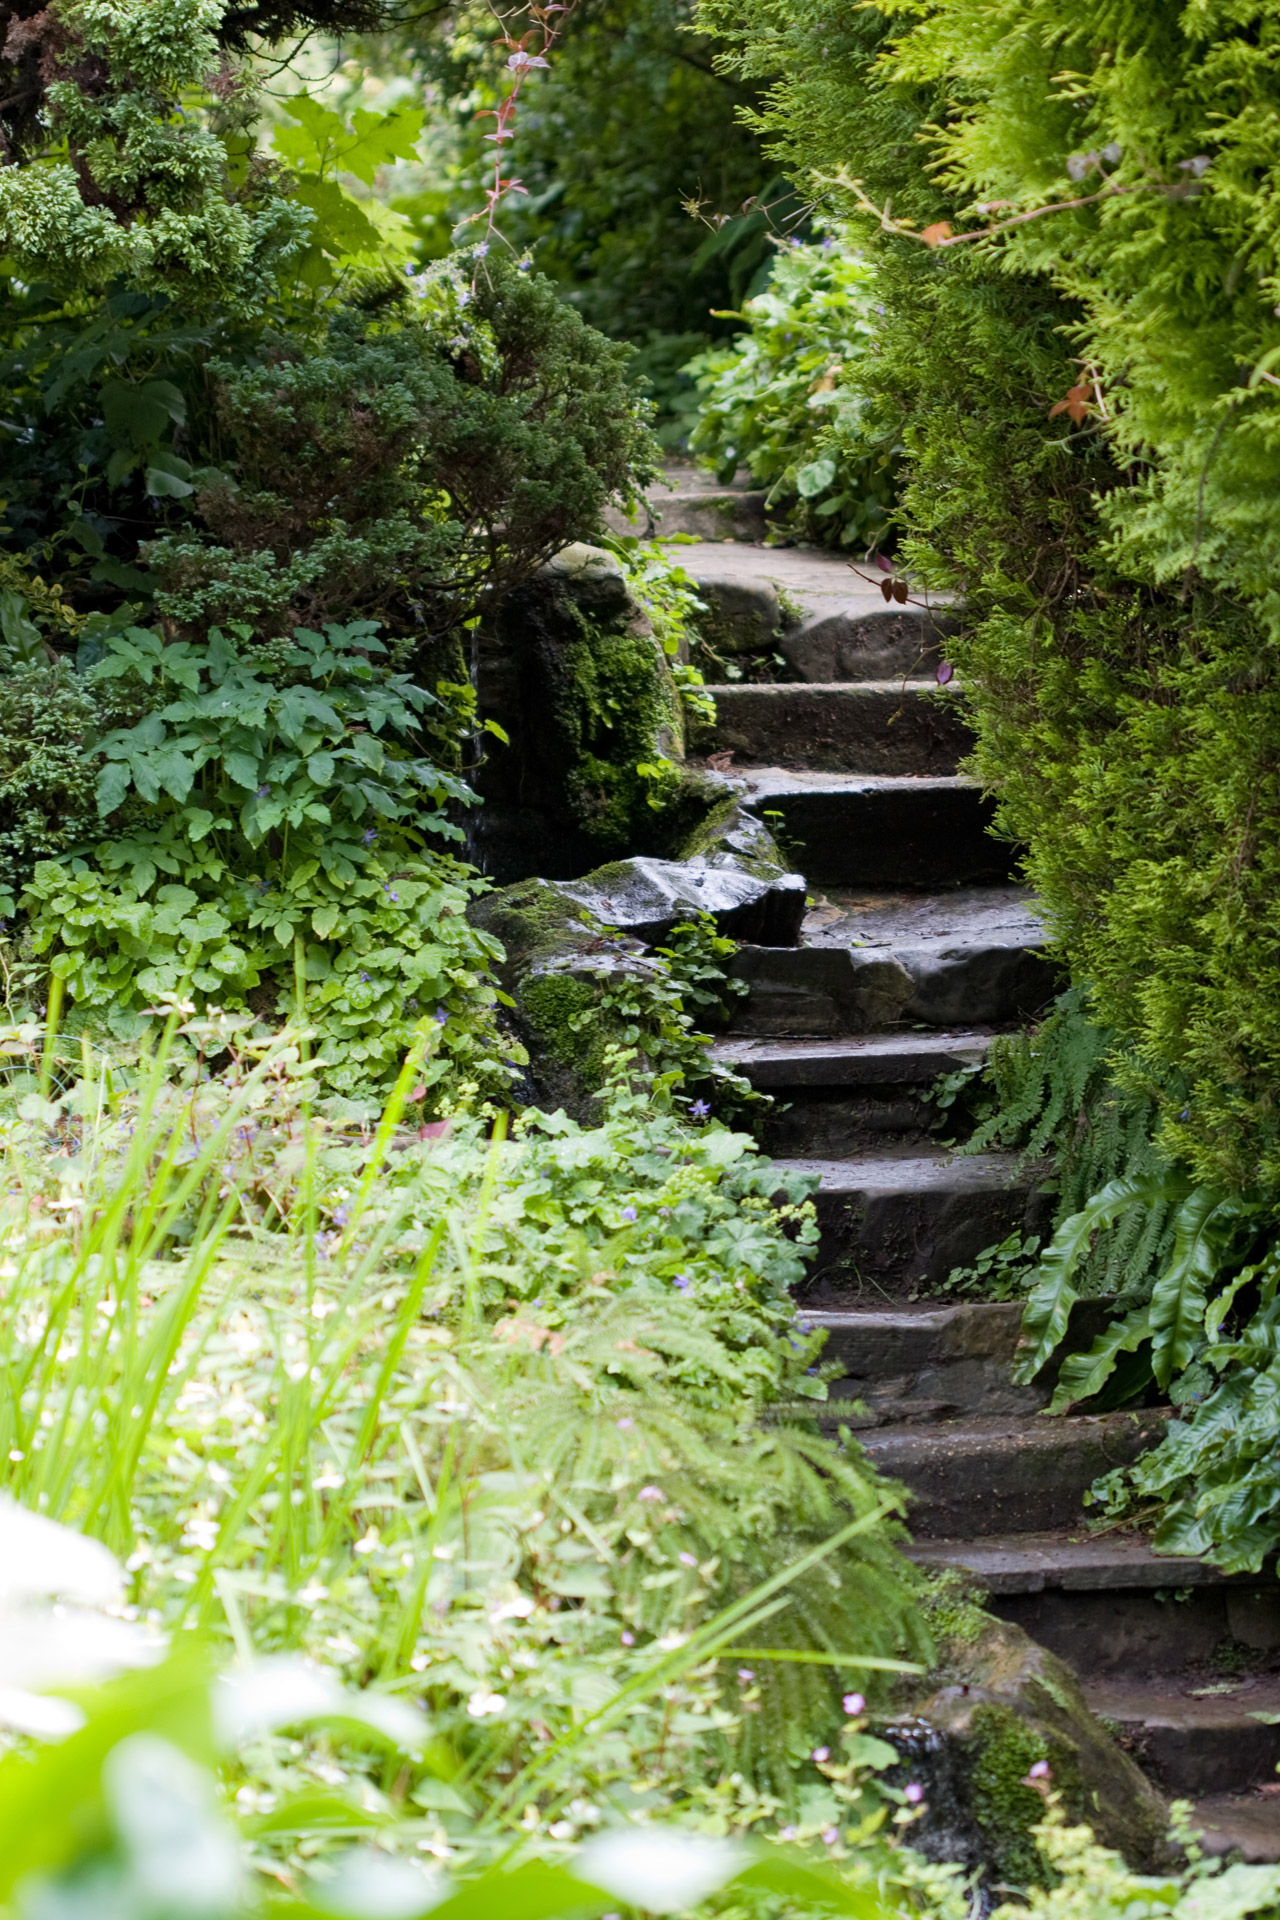 Old and worn steps hidden in the dense vegetation